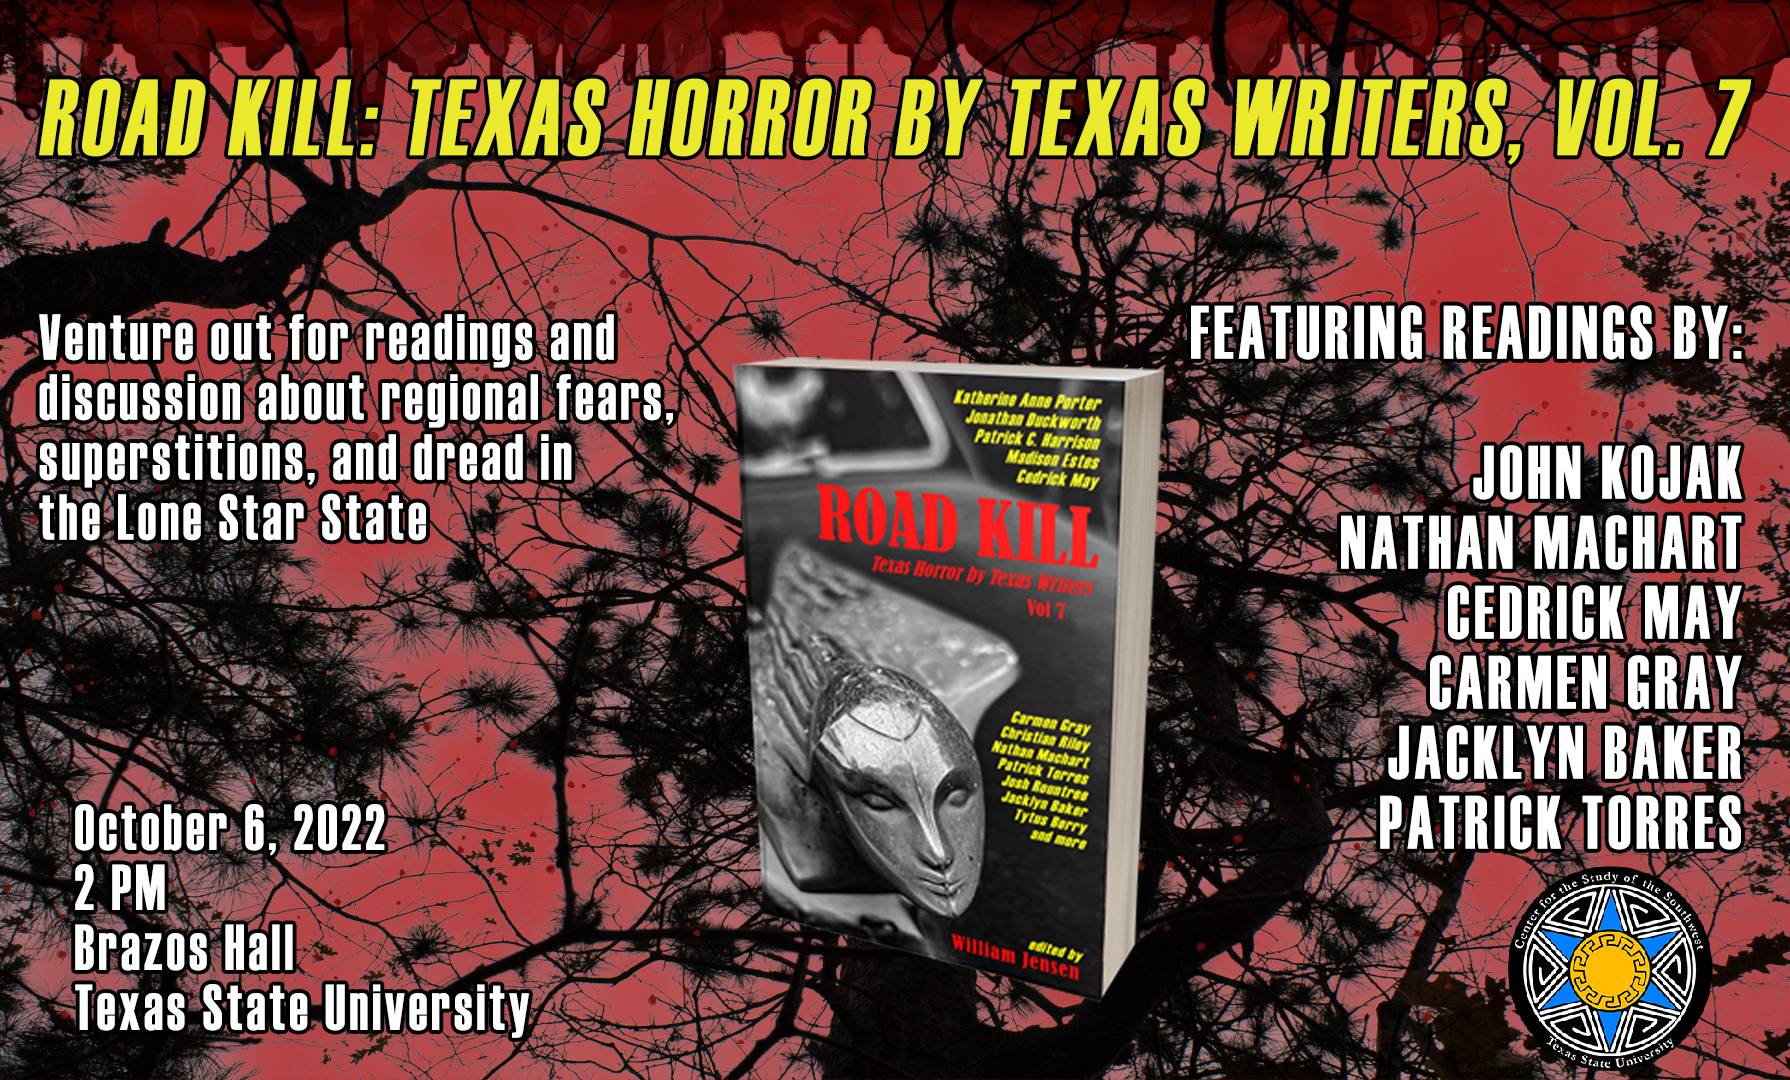 Road Kill: Texas Horror By Texas Writers